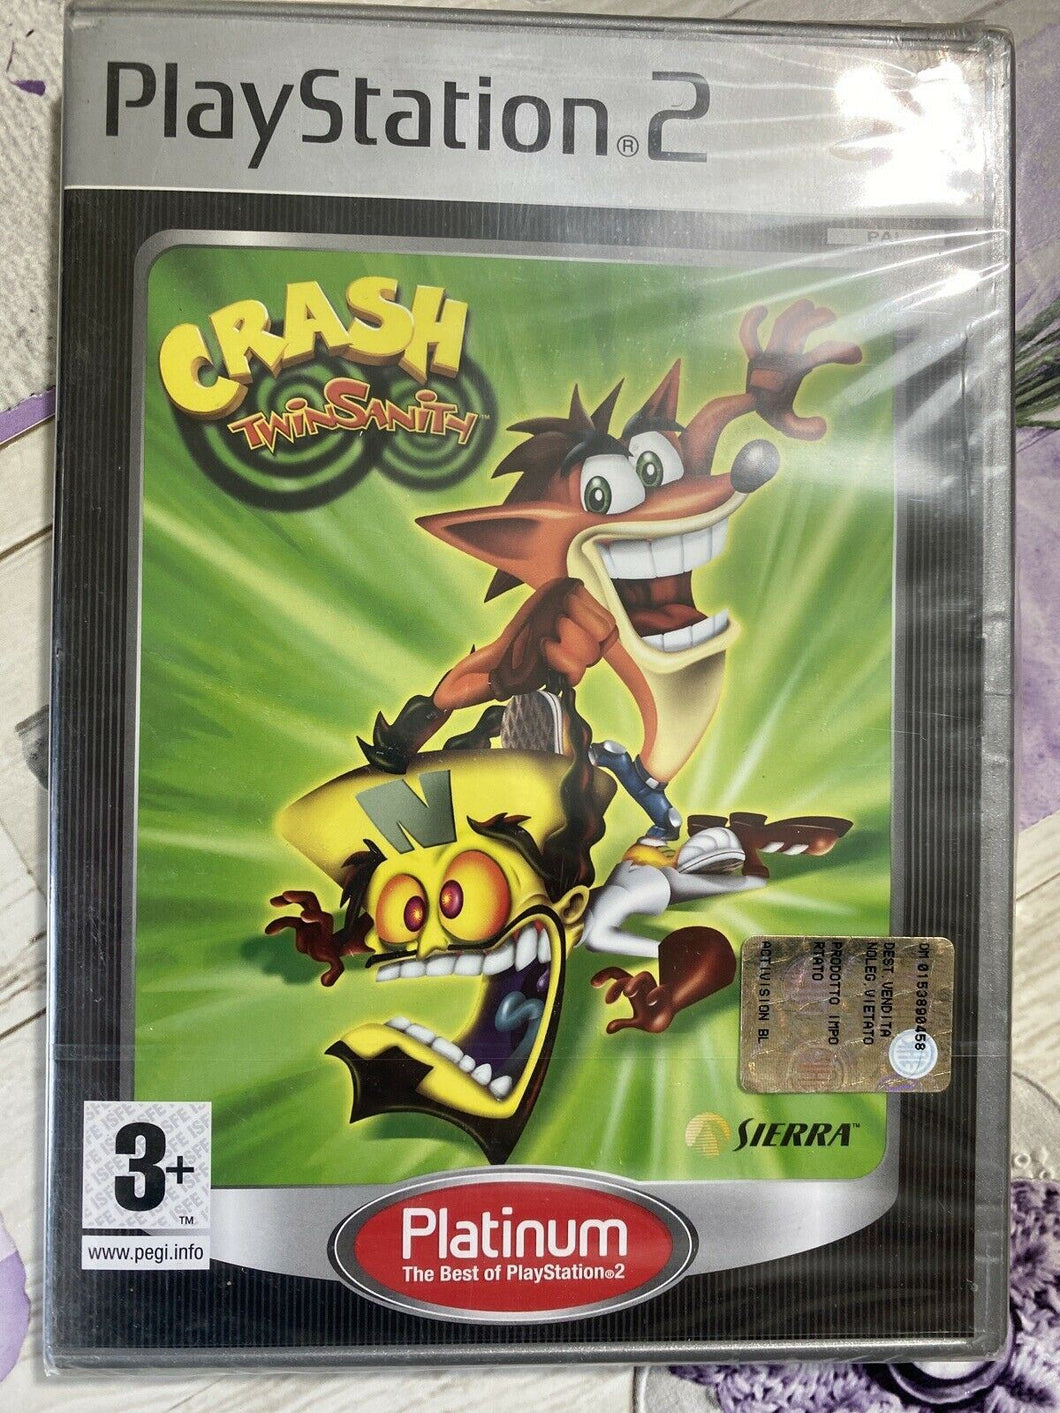 Crash Twinsanity PS2 Italiano (PlayStation 2, 2004), Platinum version PAL ITA